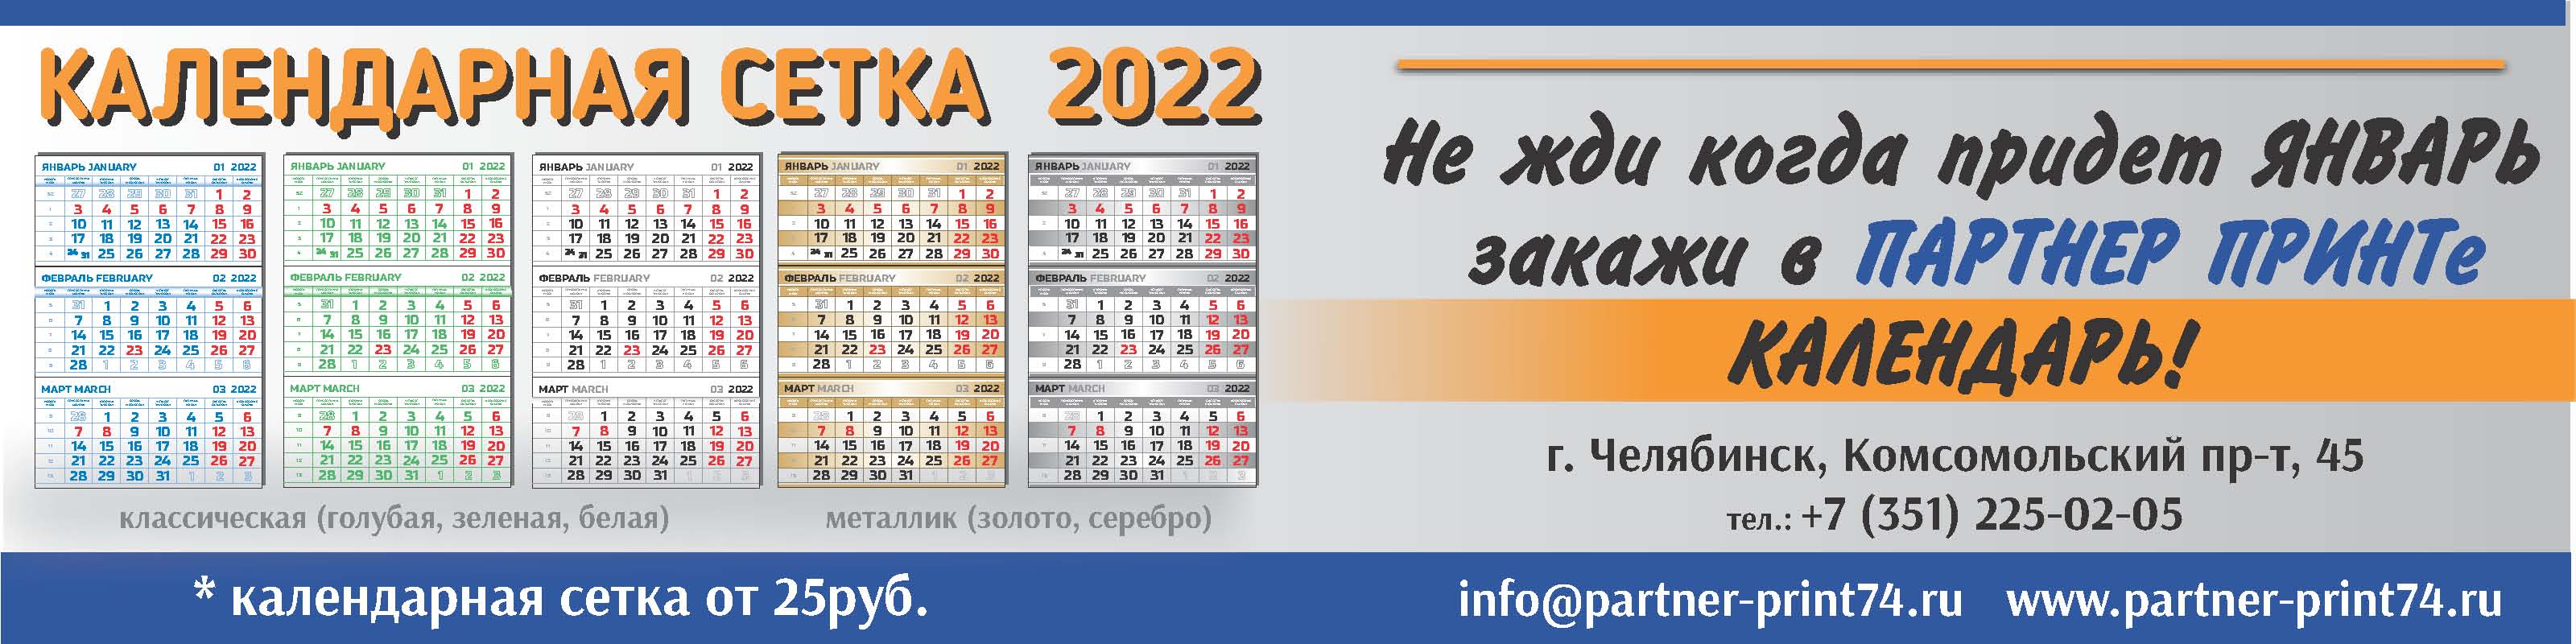 Календарная сетка 2022